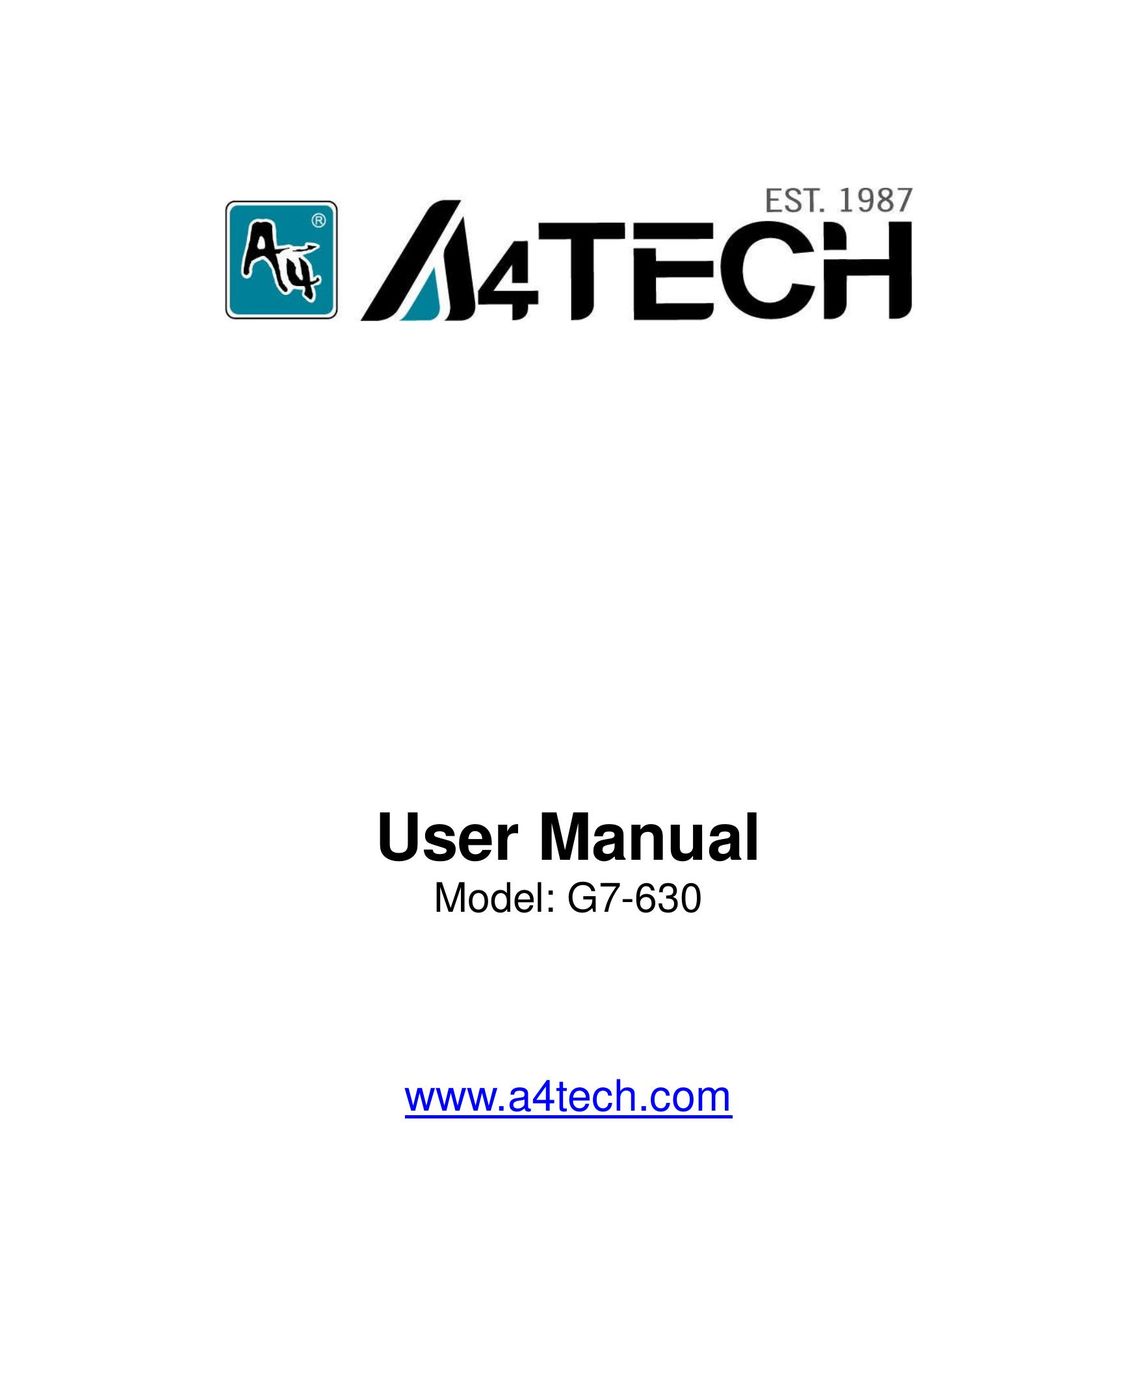 A4 Tech. G7-630 Mouse User Manual